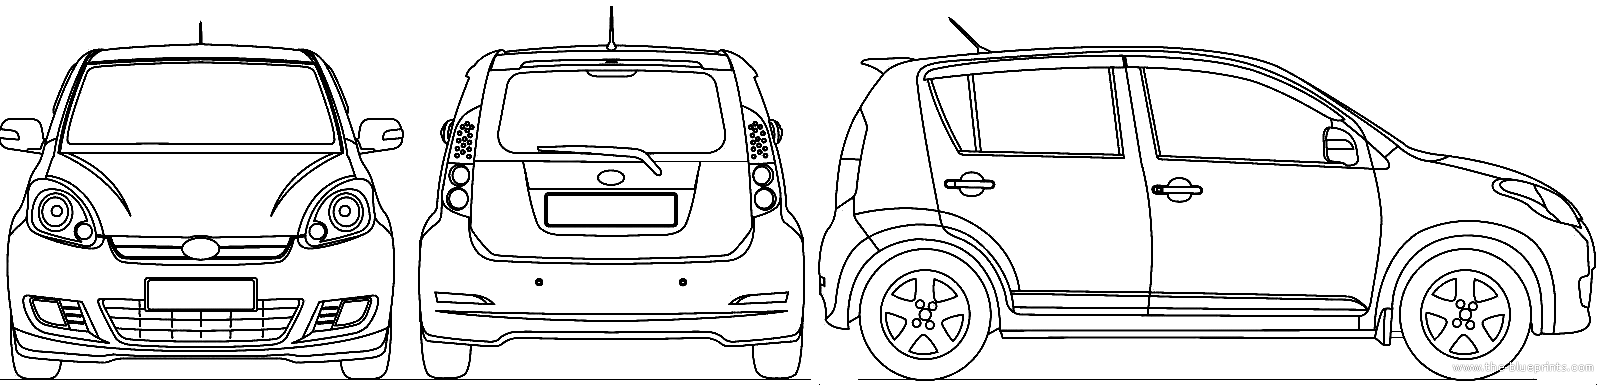 Blueprints > Cars > Various Cars > Perodua Myvi (2008)